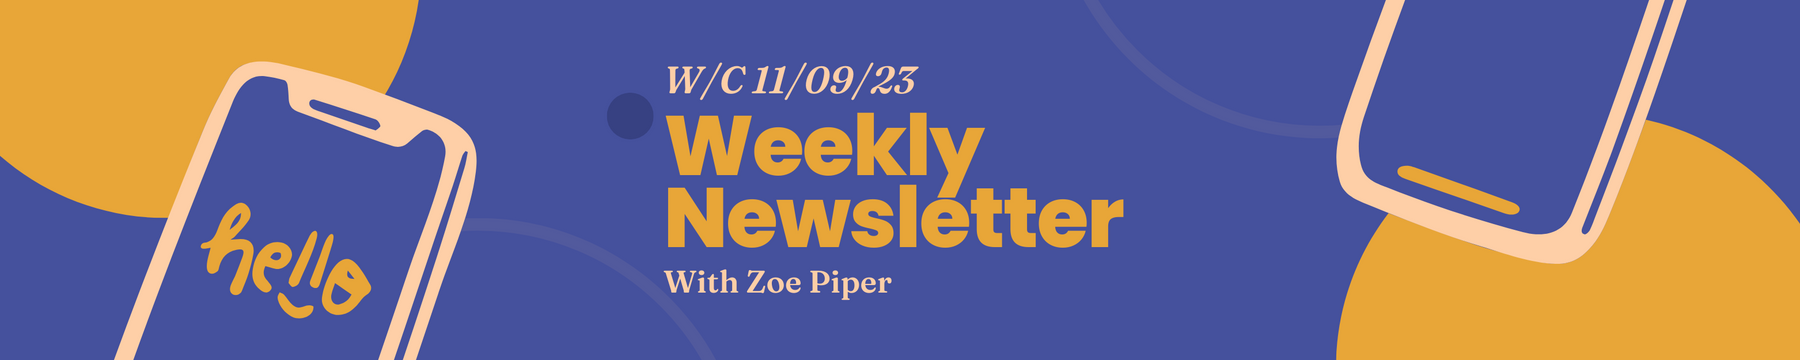 Weekly Newsletter W/C 11/09/23